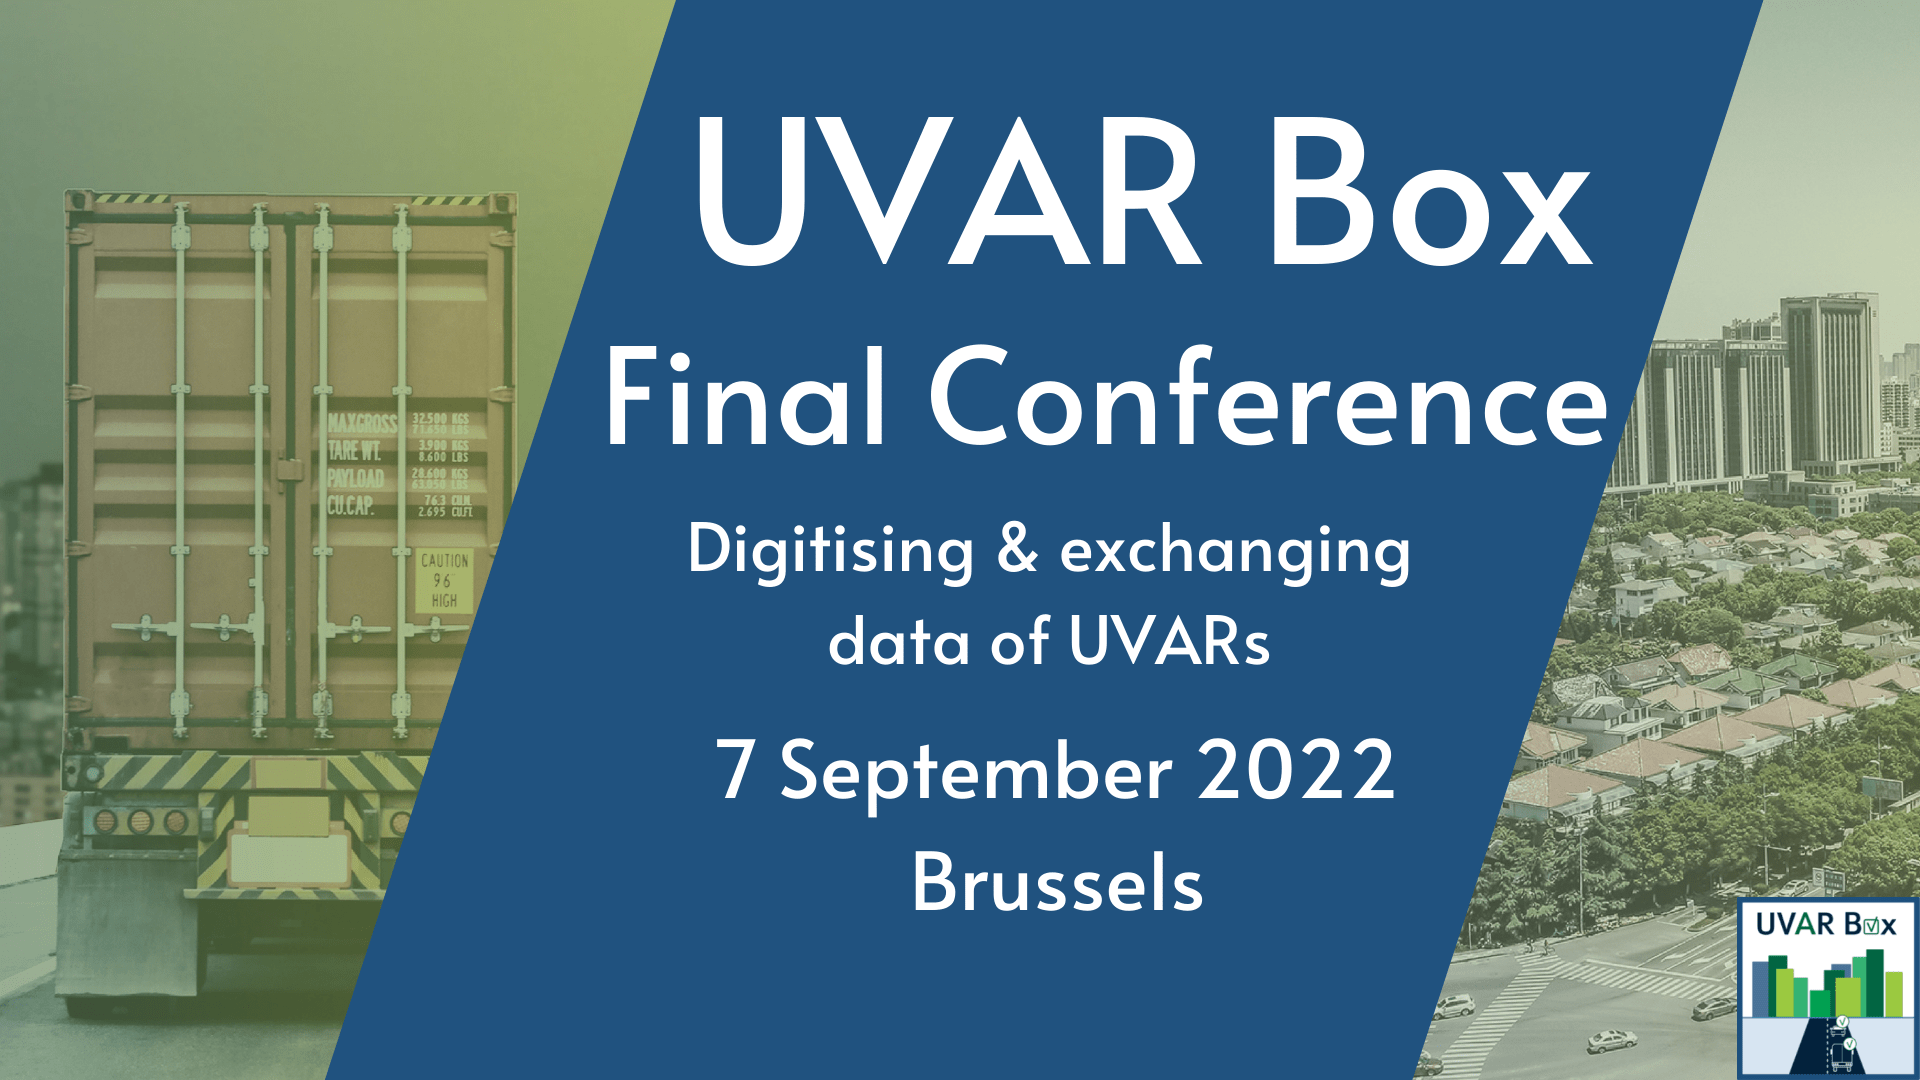 UVAR Box Final Conference